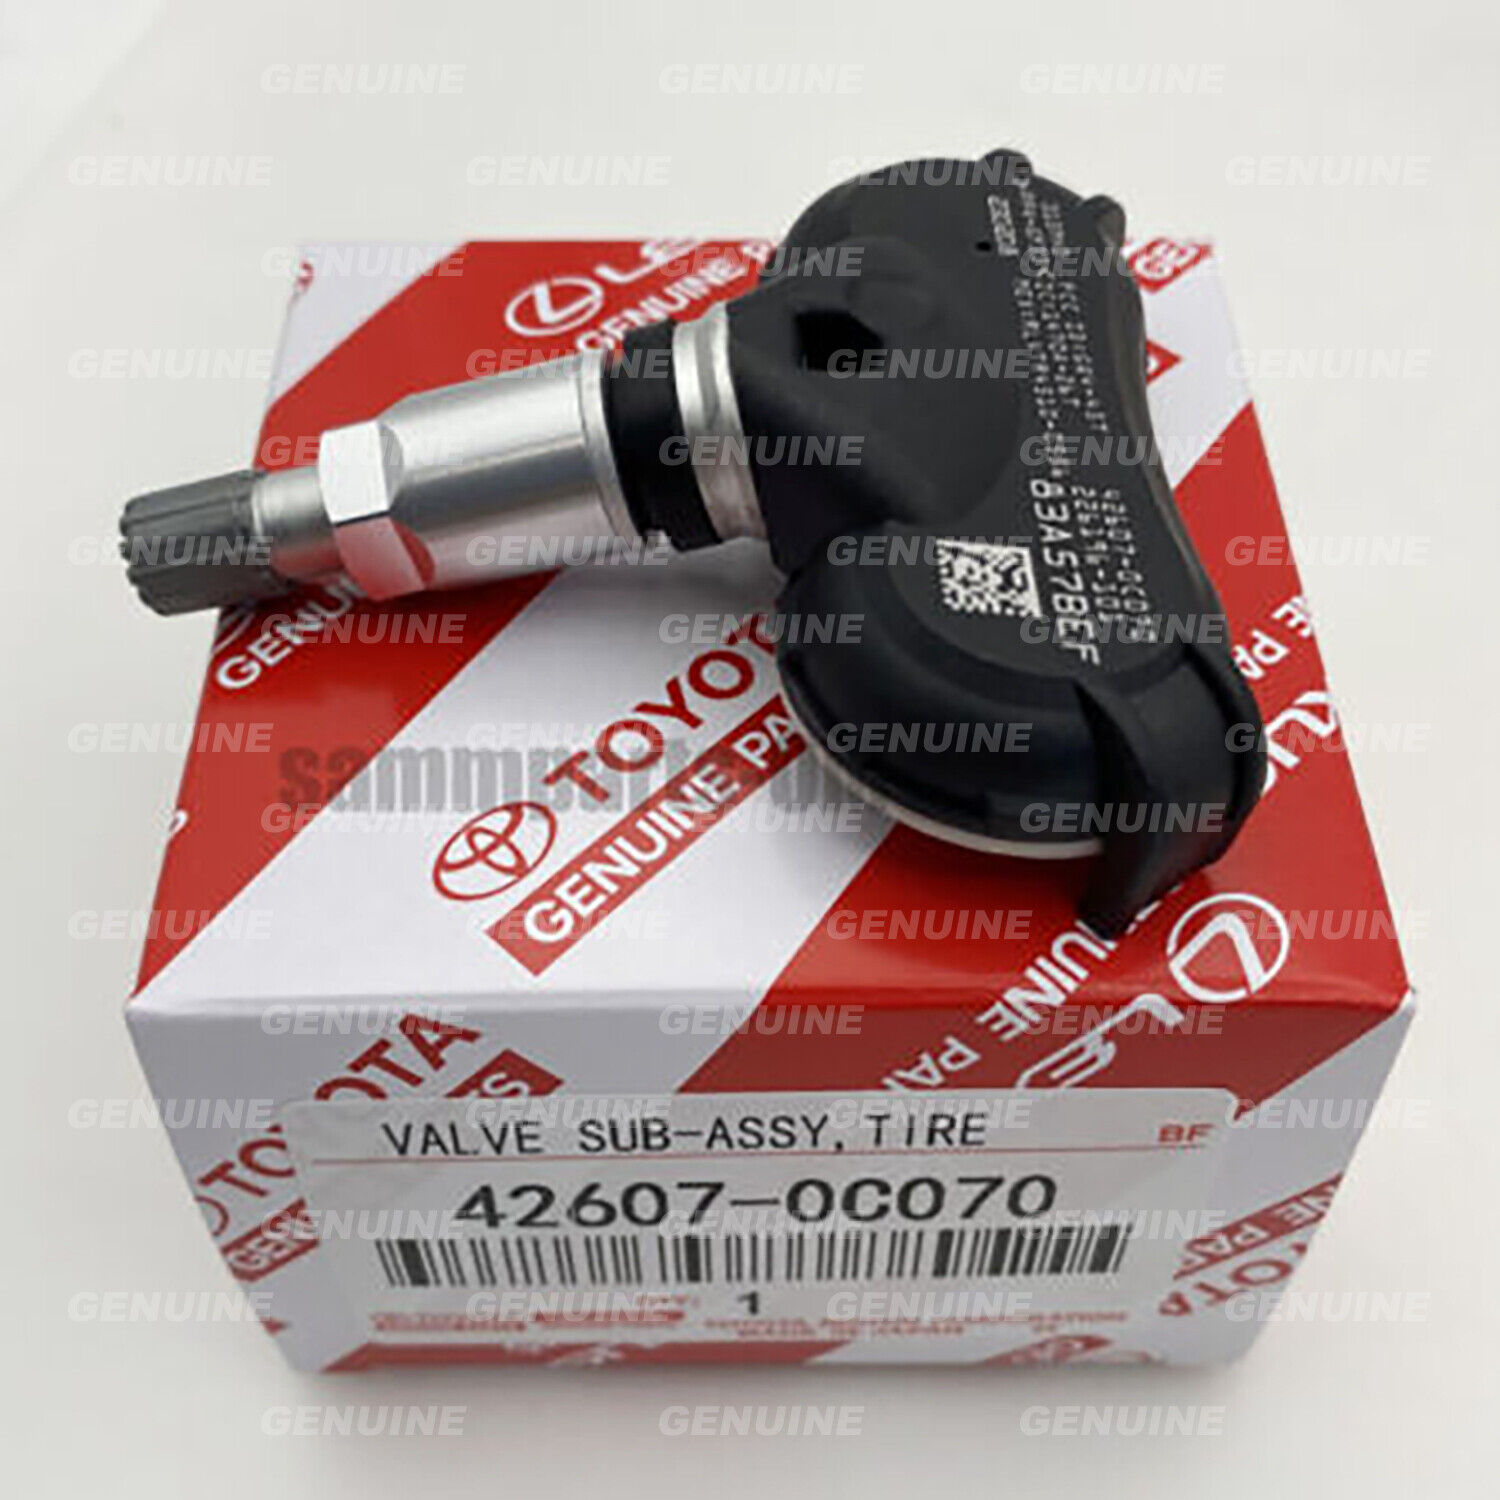 1 TPMS Tire Pressure Sensor 42607-0C070/08010 for Toyota Sienna Tundra Sequoia